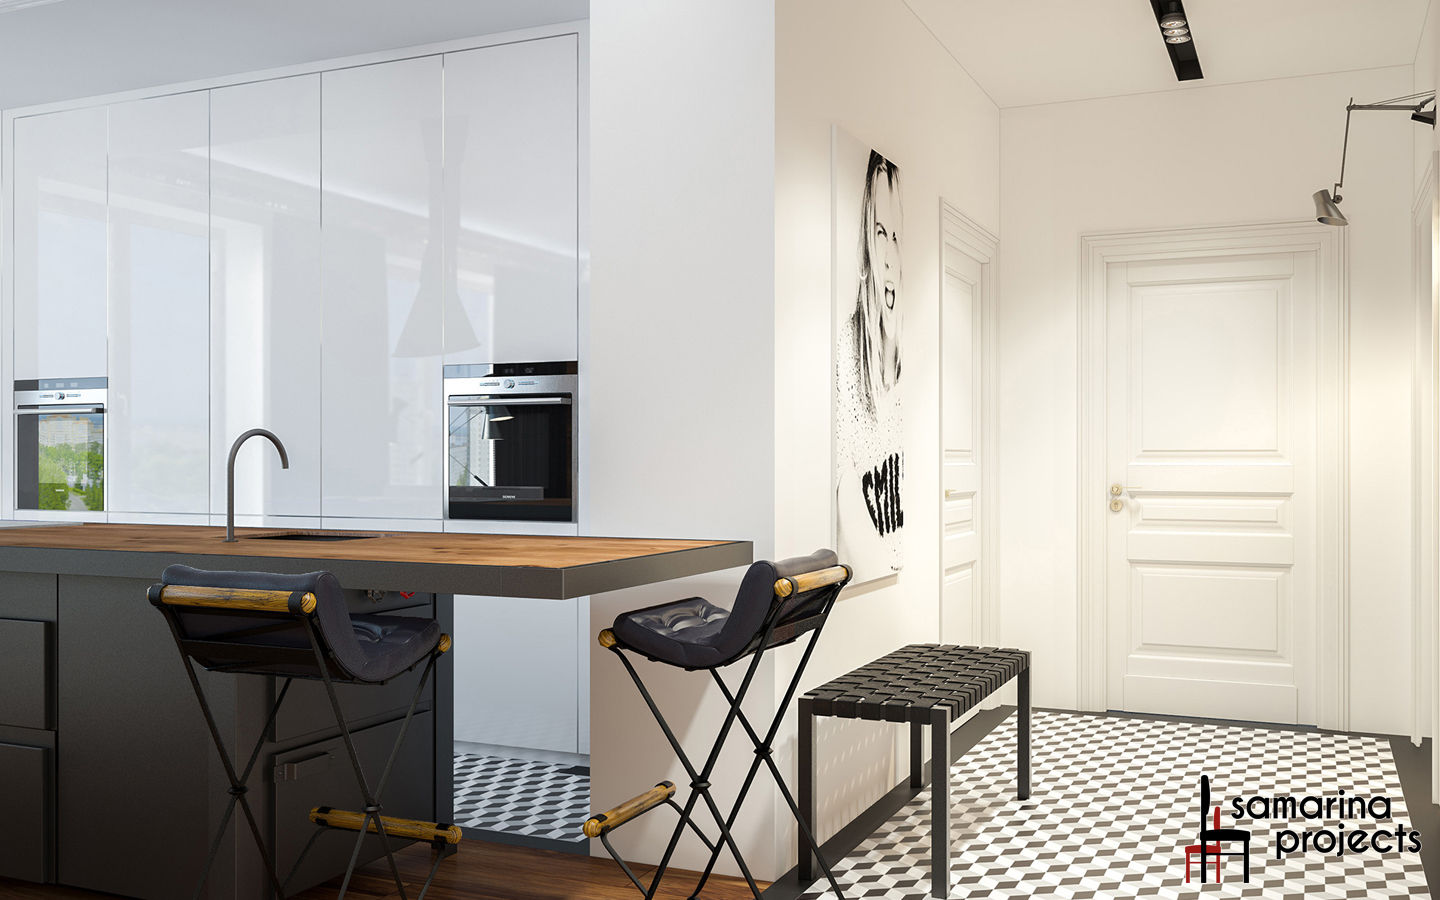 Дизайн квартиры "Геометрия цвета", Samarina projects Samarina projects Cocinas de estilo minimalista